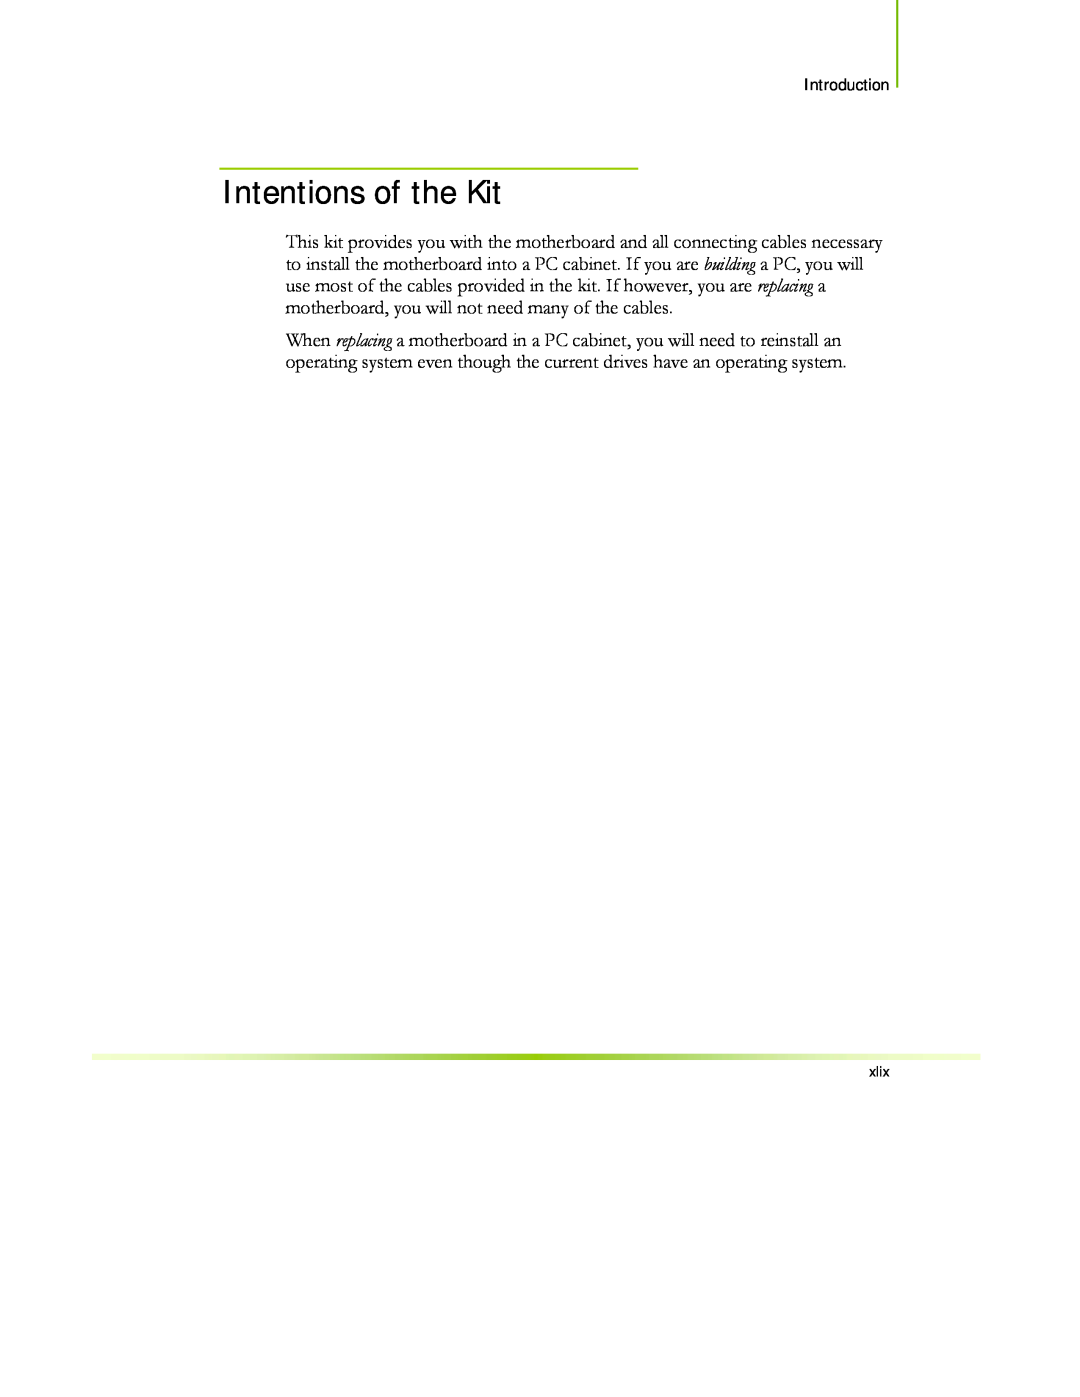 EVGA 122-CK-NF68-XX manual Intentions of the Kit, xlix 